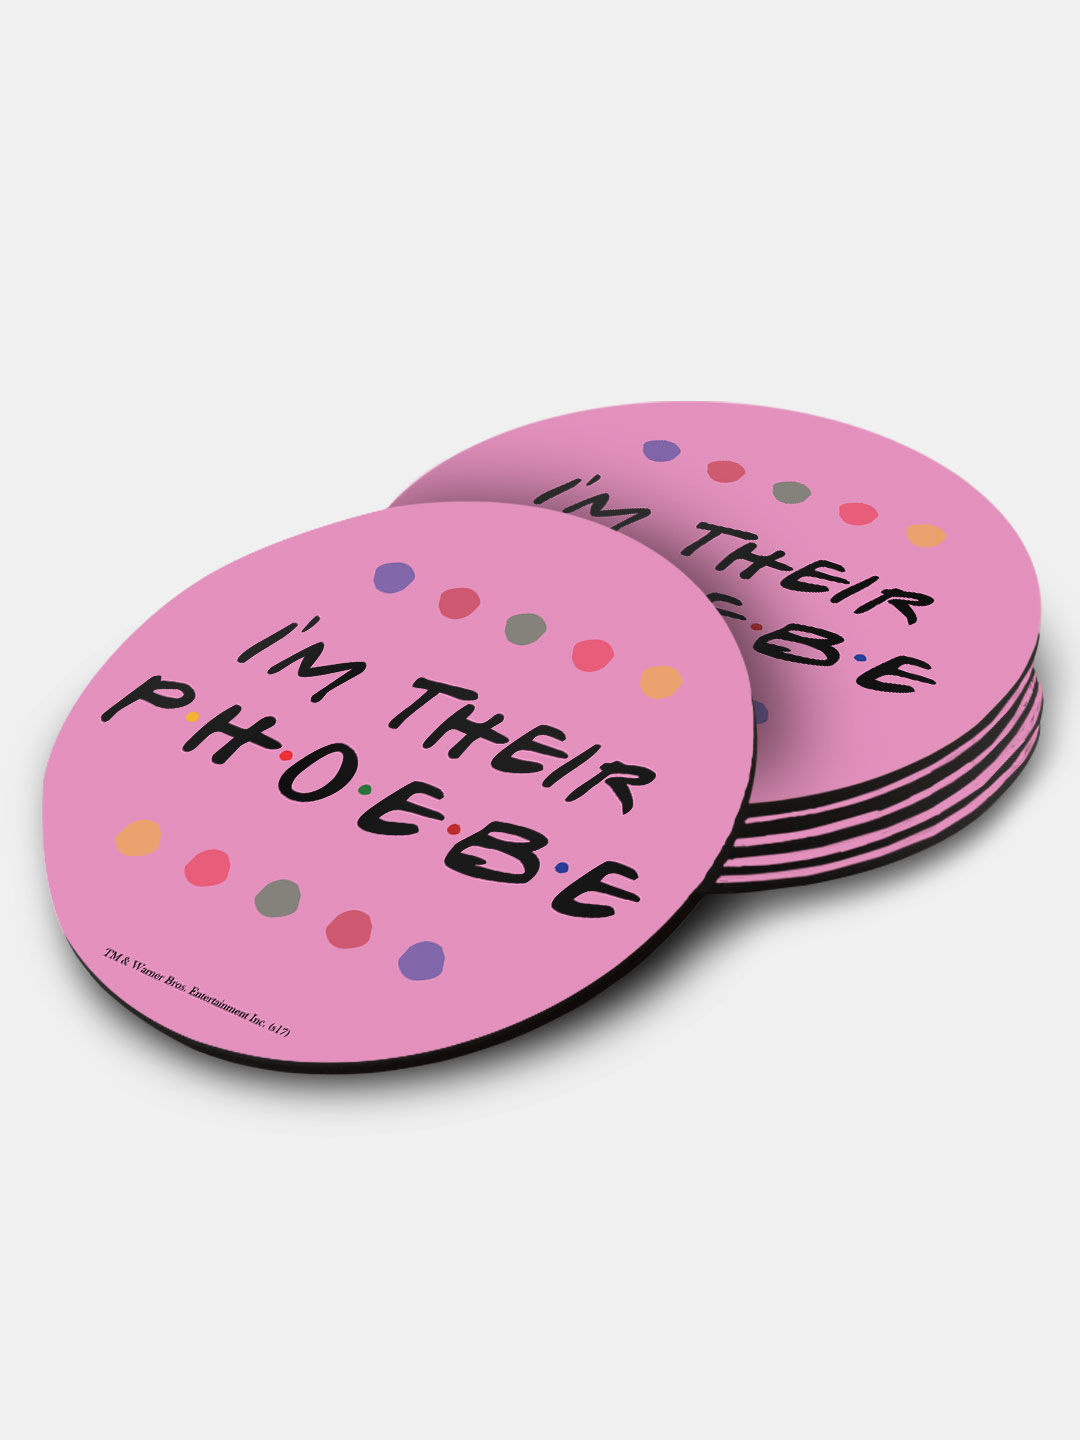 Buy Valentine Phoebe - Circular Coasters Coasters Online